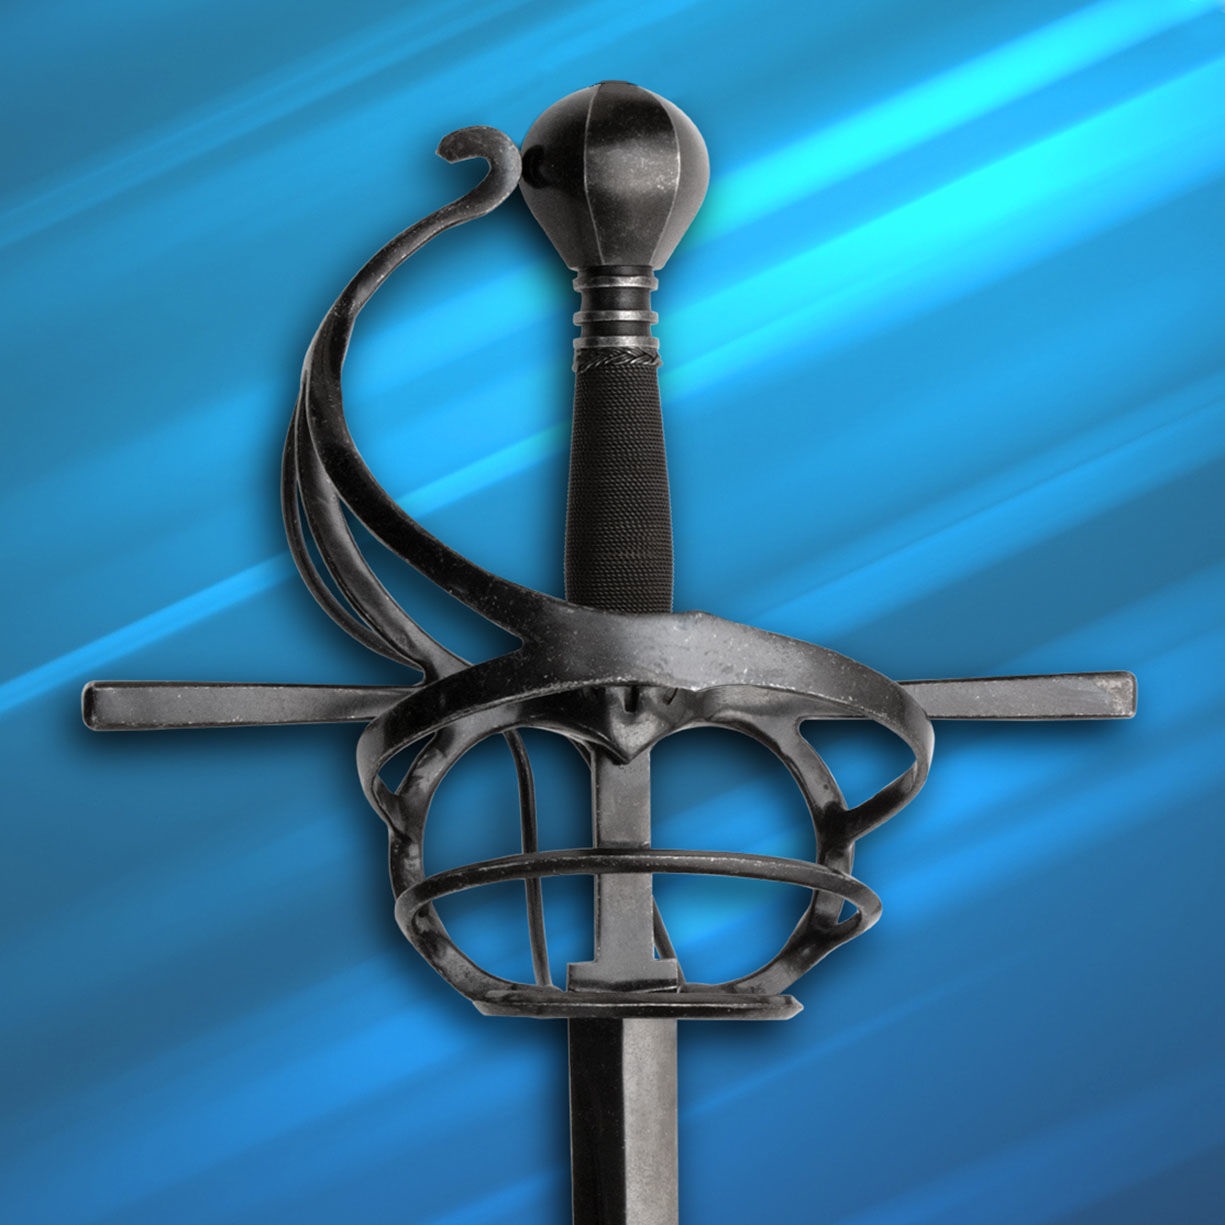 Battlecry Ropera Sword